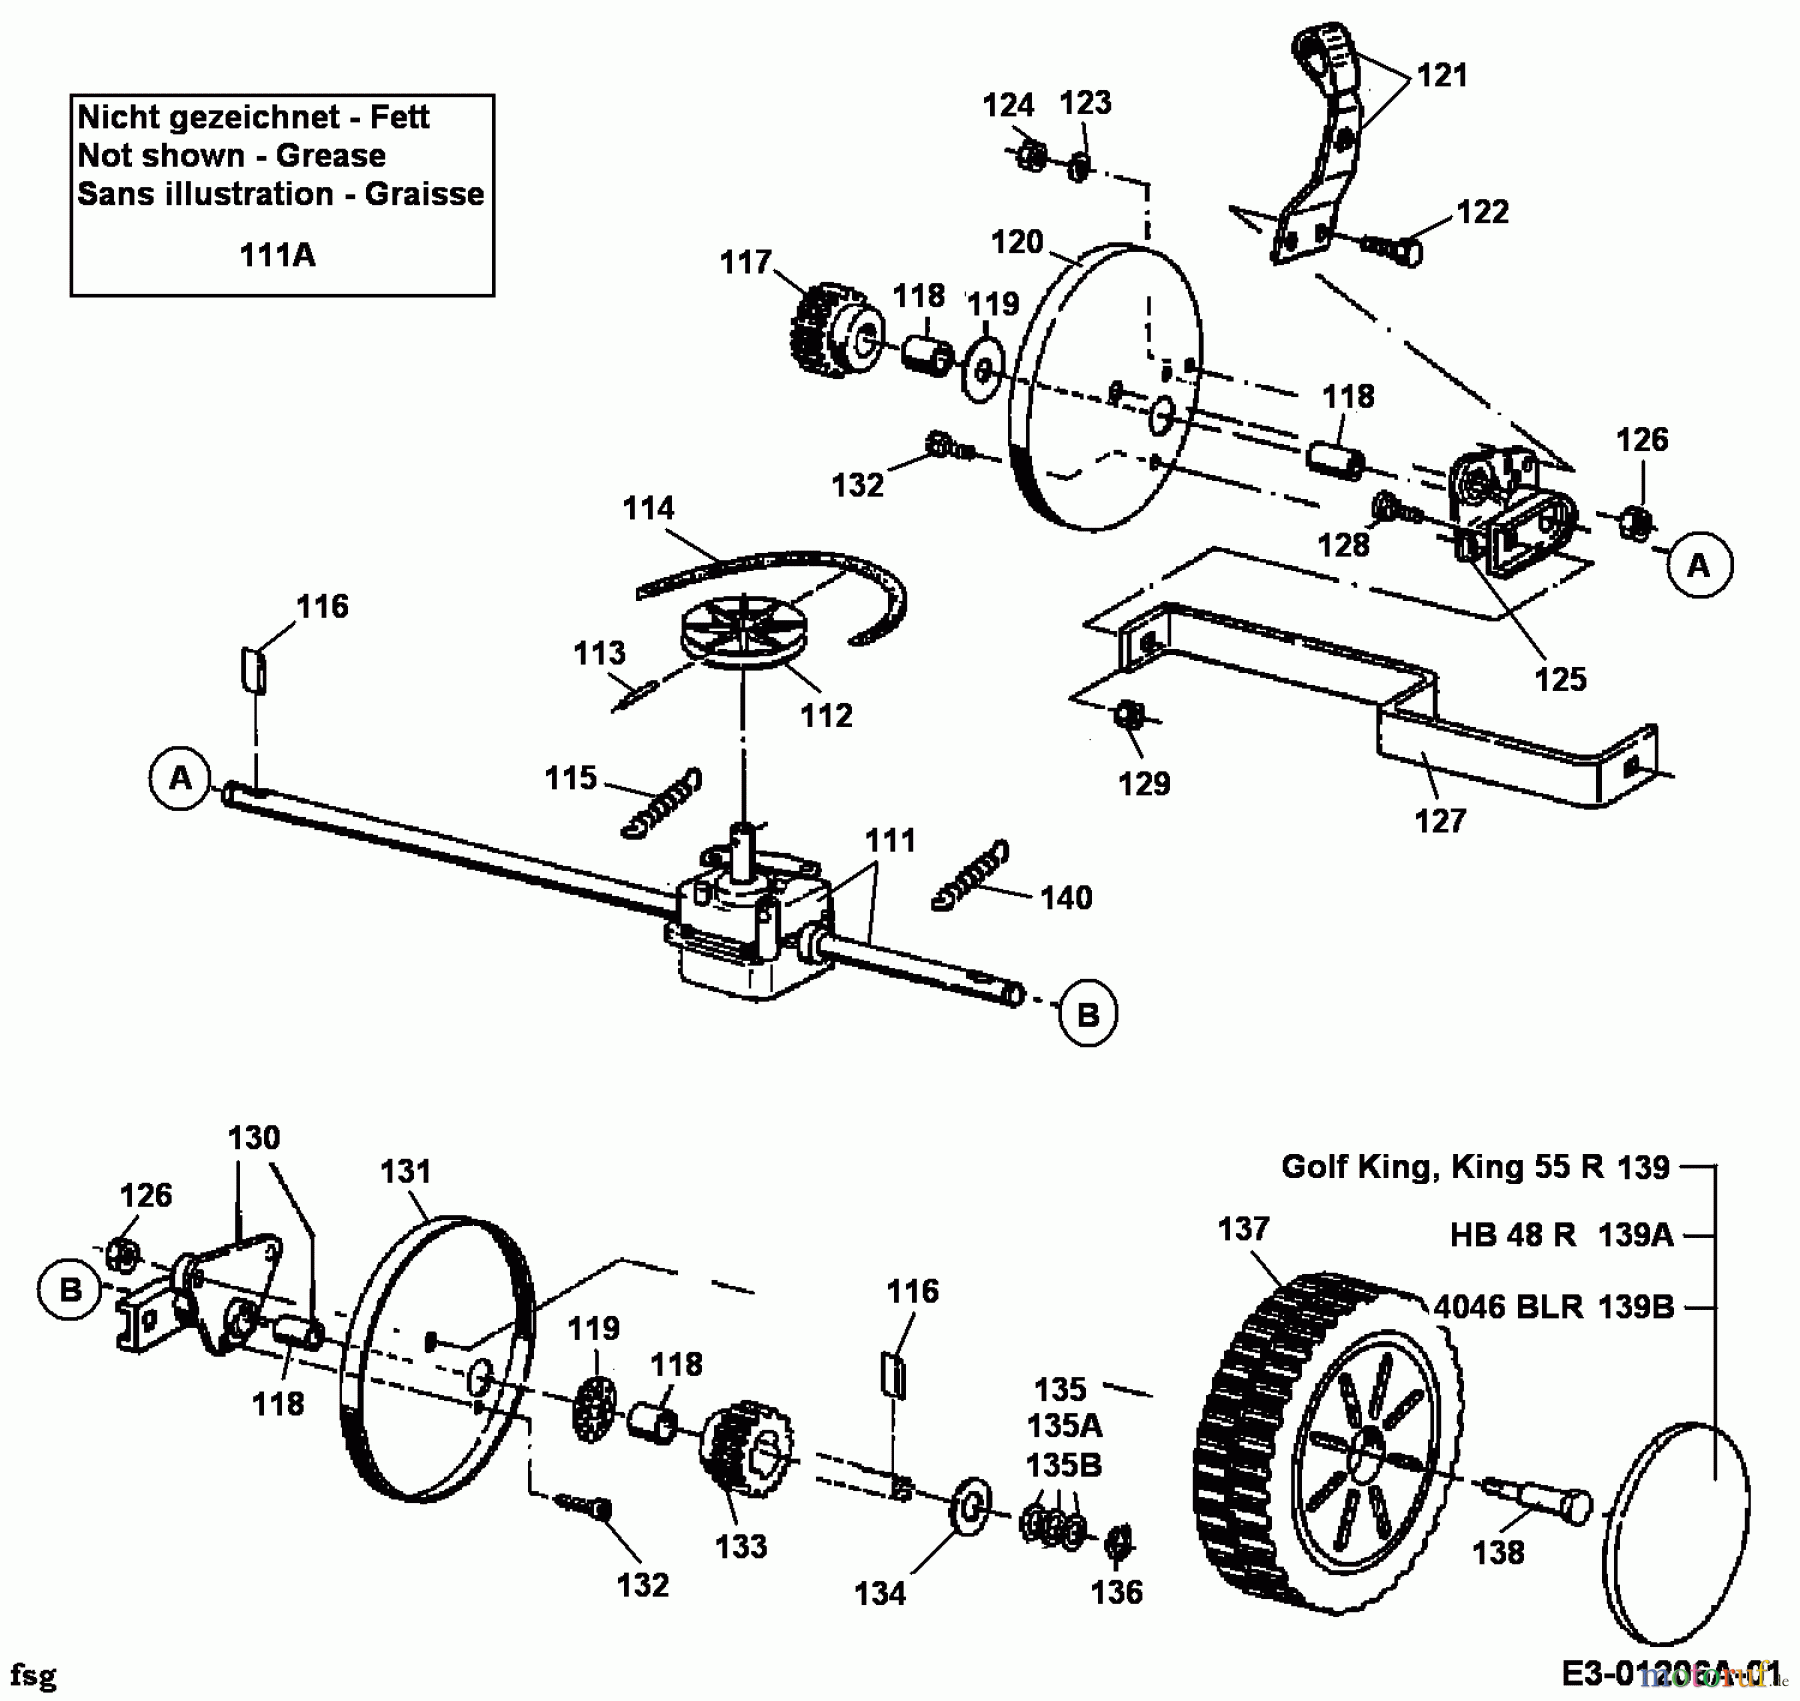  Gutbrod Petrol mower self propelled HB 48 R 12A-T14Z604  (1998) Gearbox, Wheels